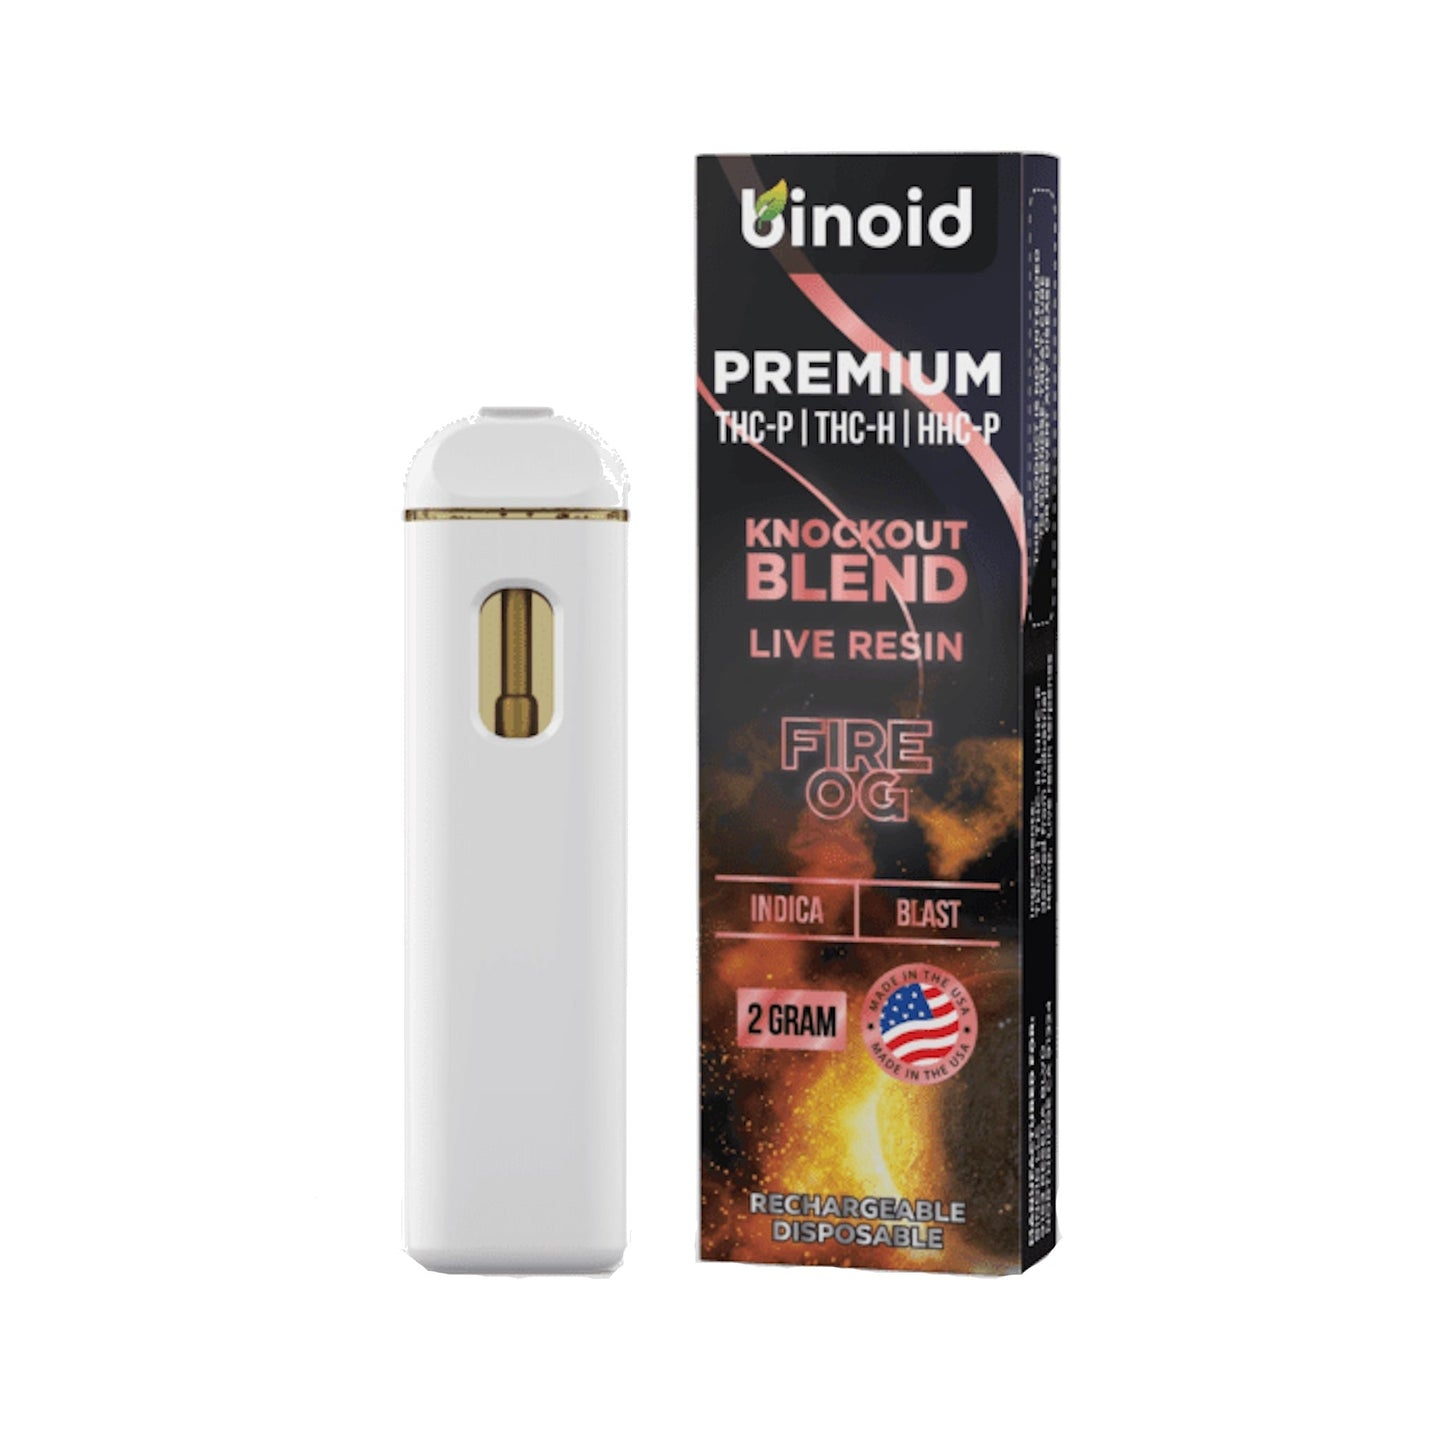 Binoid Knockout Blend Vaporizer - 2000mg Fire OG